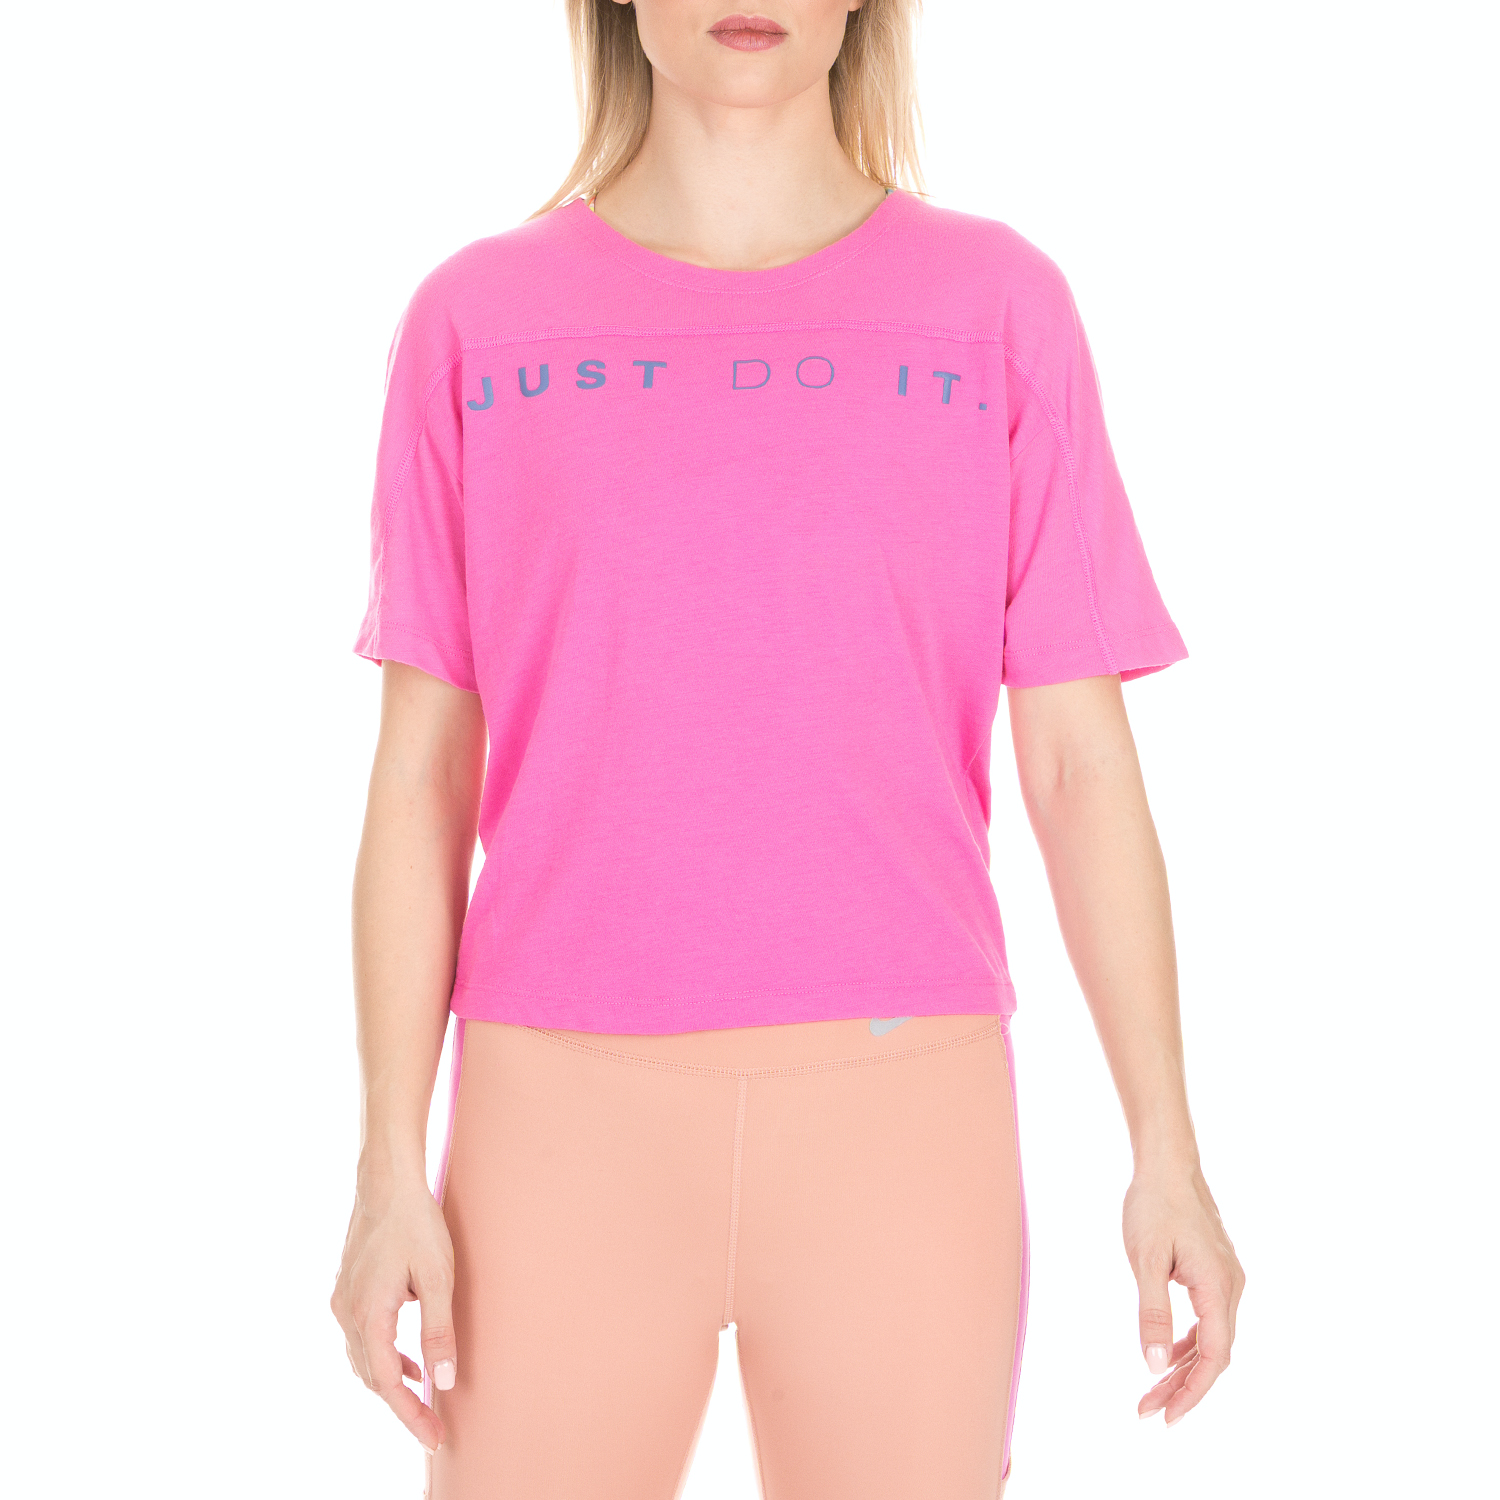 NIKE - Γυναικείο t-shirt NIKE MILER SURF ροζ Γυναικεία/Ρούχα/Αθλητικά/T-shirt-Τοπ